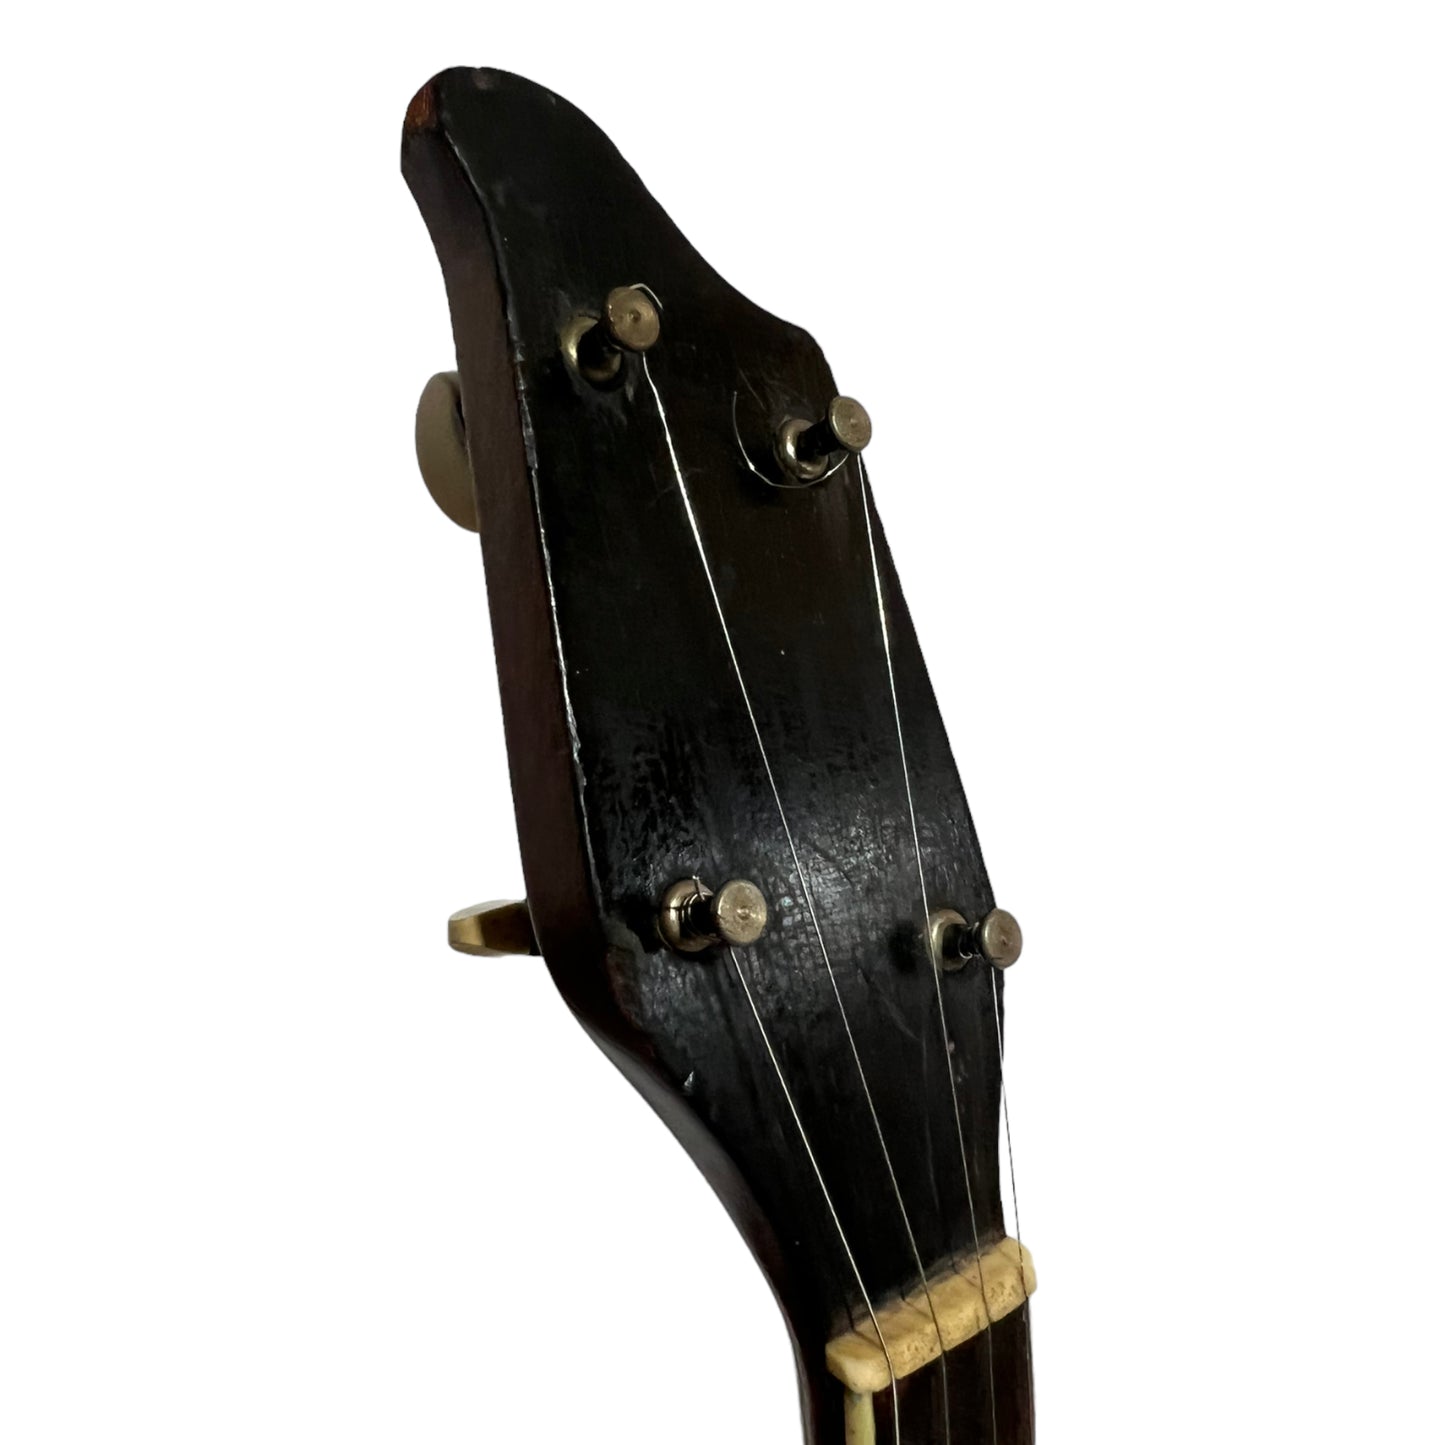 1930's Kay/Bruno 4-String Tenor Acoustic Guitar